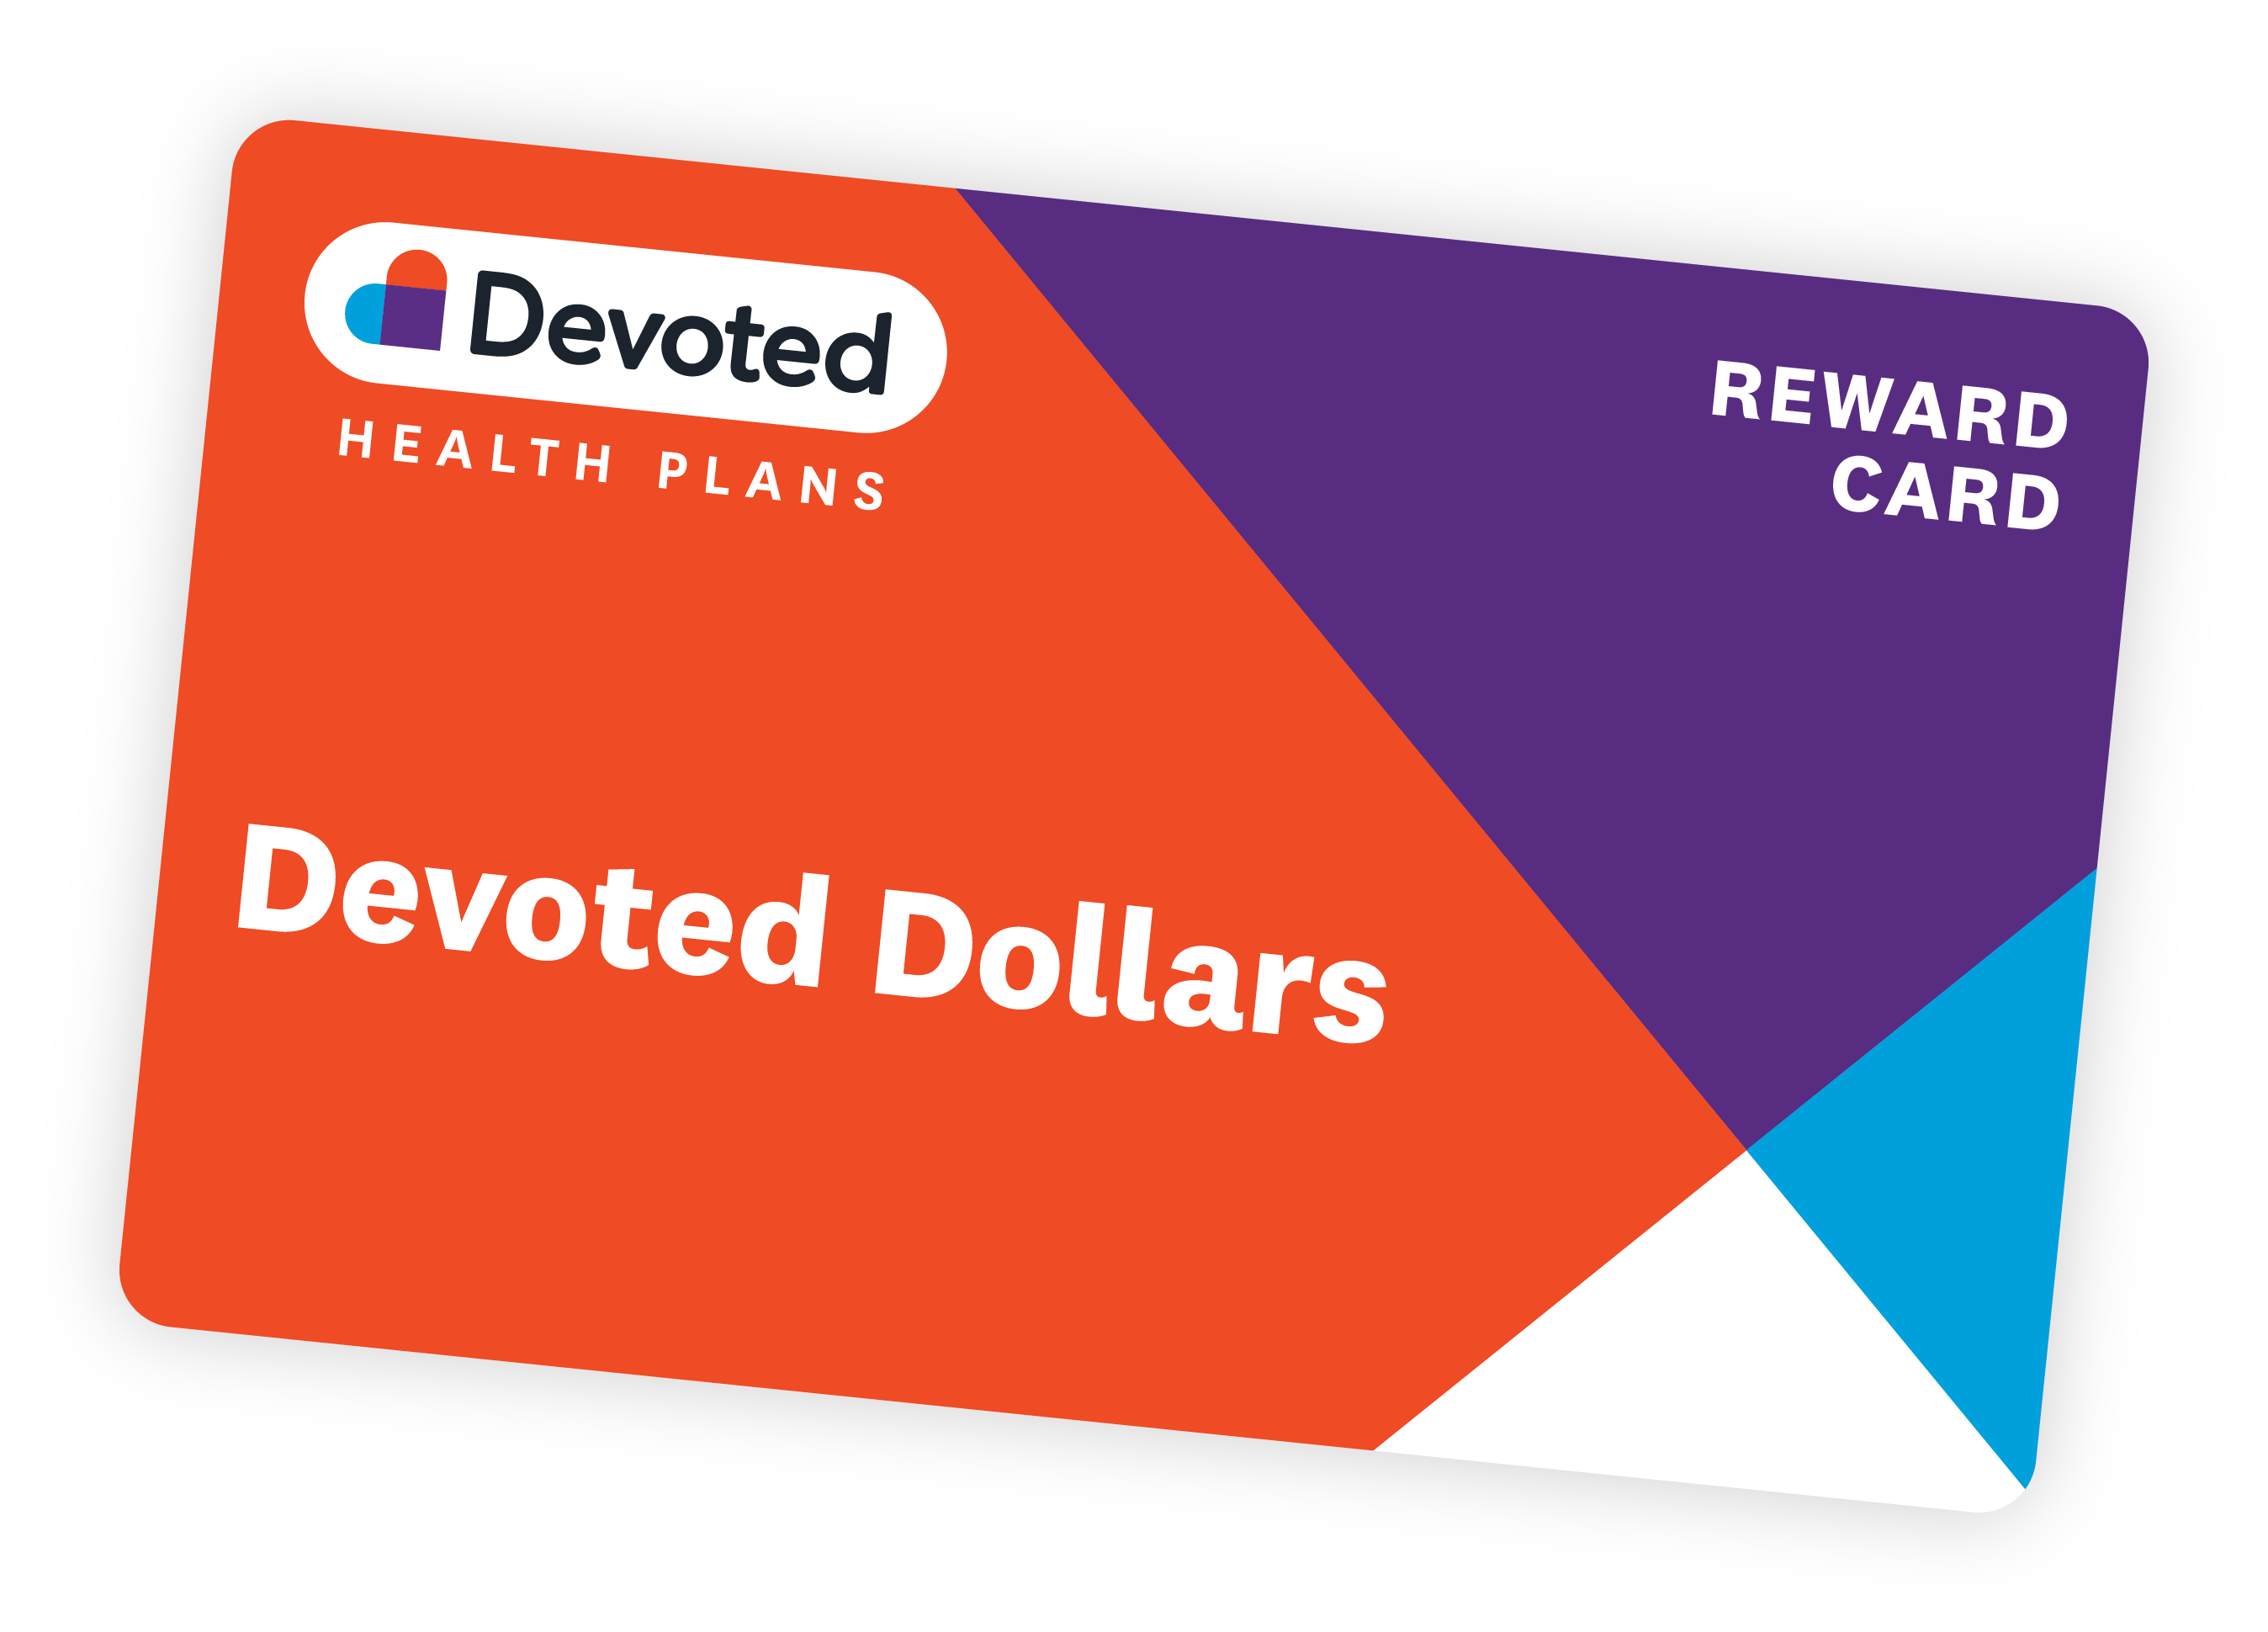 Devoted Dollars reward card